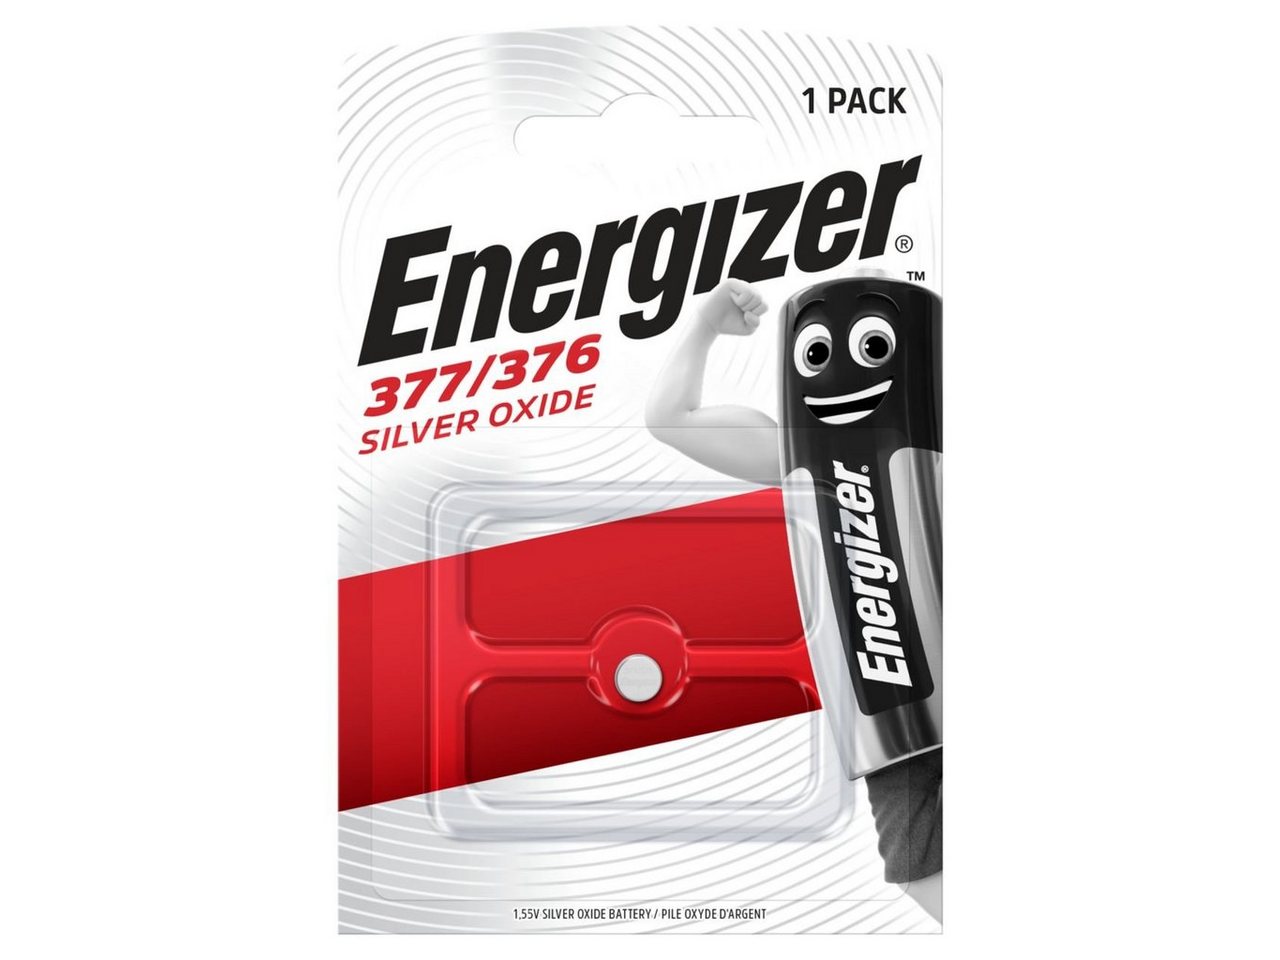 Energizer Energizer Knopfzelle 377/376 Silver Oxide, 1,55 V Knopfzelle von Energizer